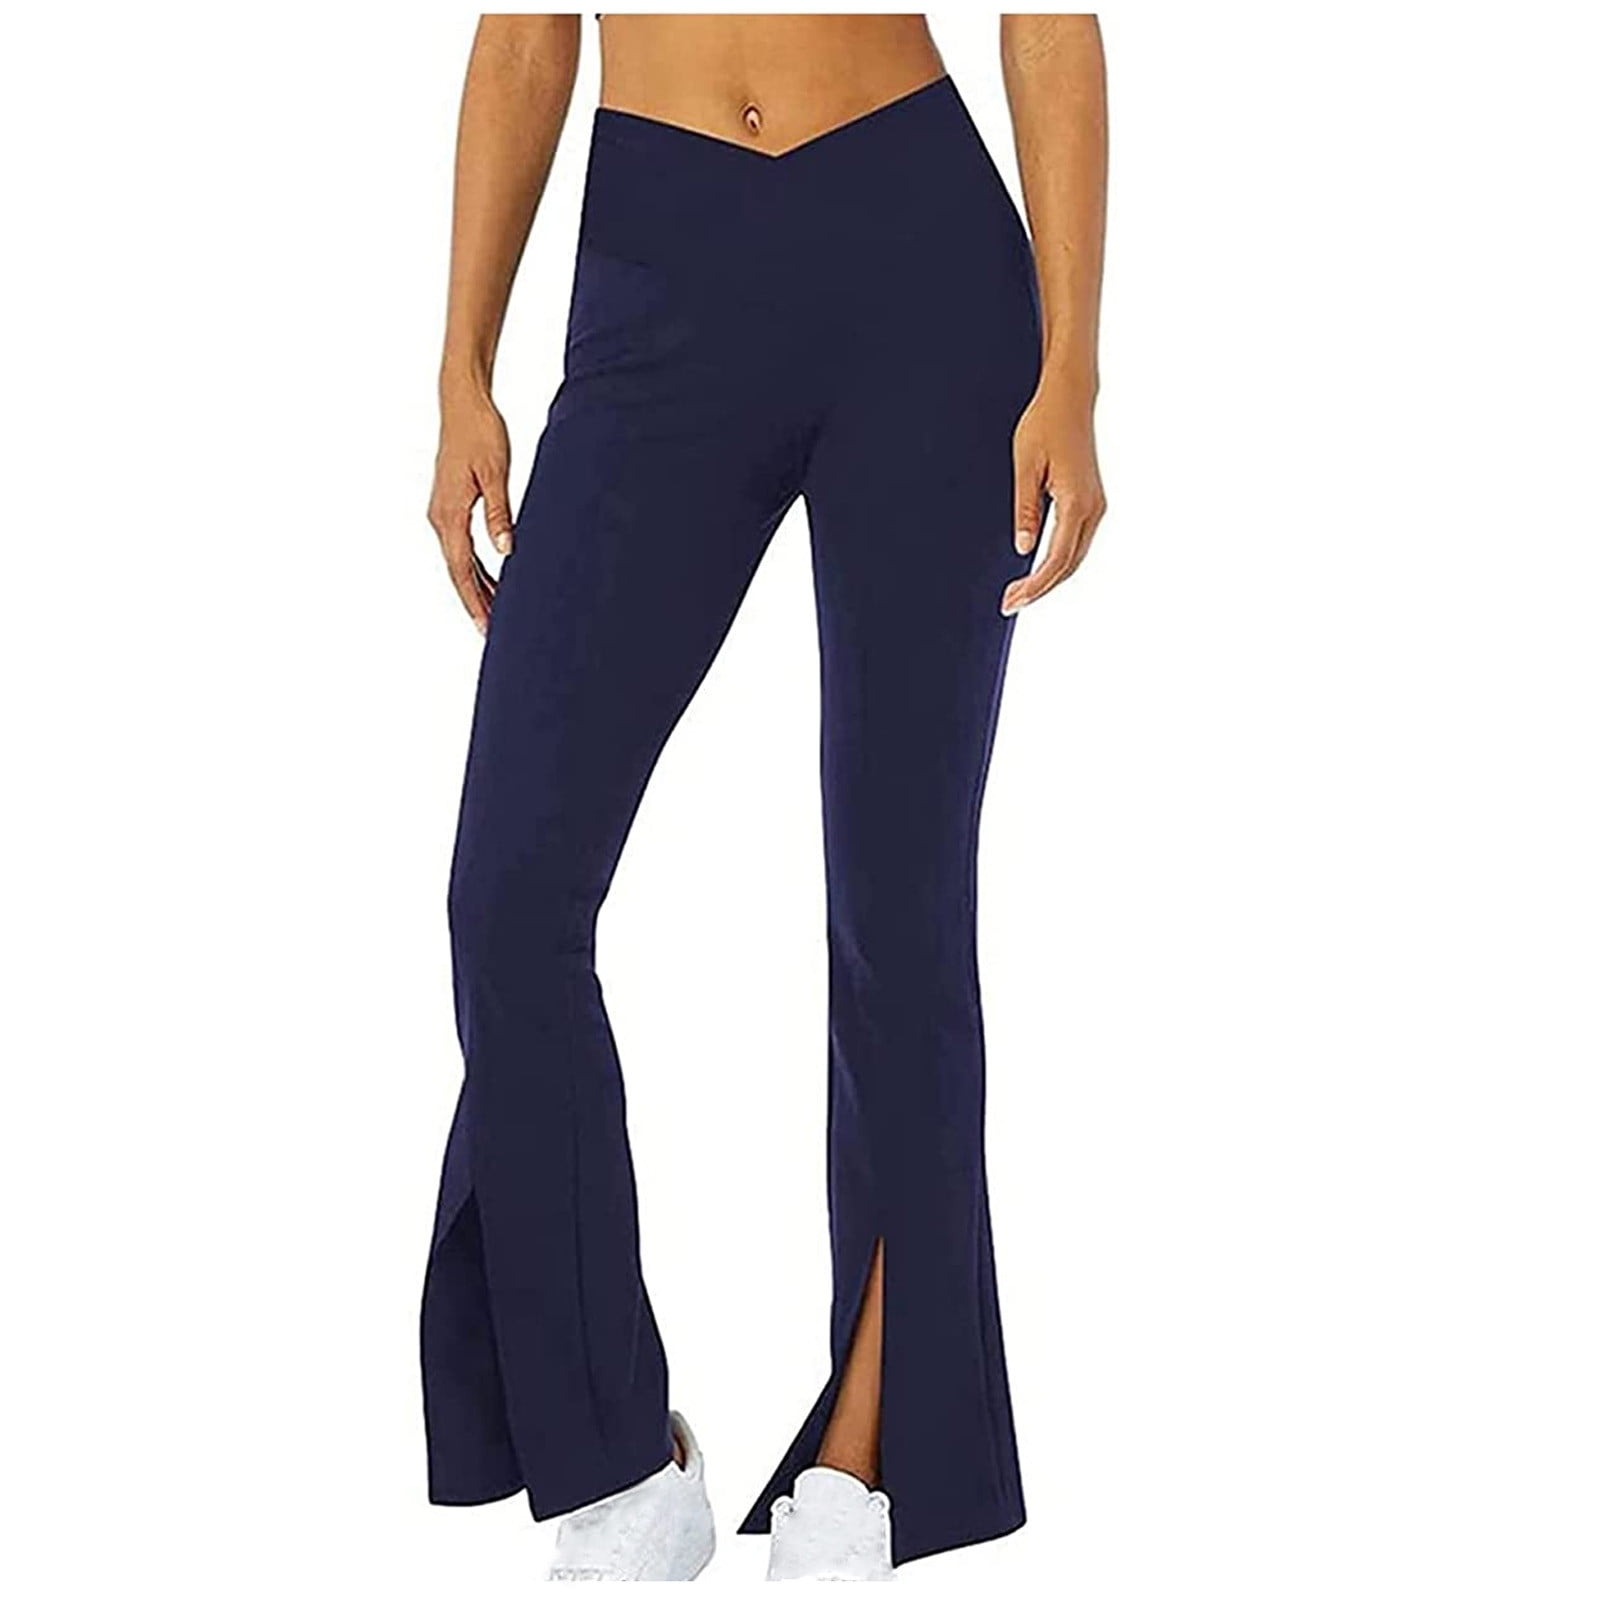 XFLWAM Women's Flared Yoga Pants Leggings Bootcut Crossover High-Waist  Front Slit Plus Size Workout Pants Dark Blue S 